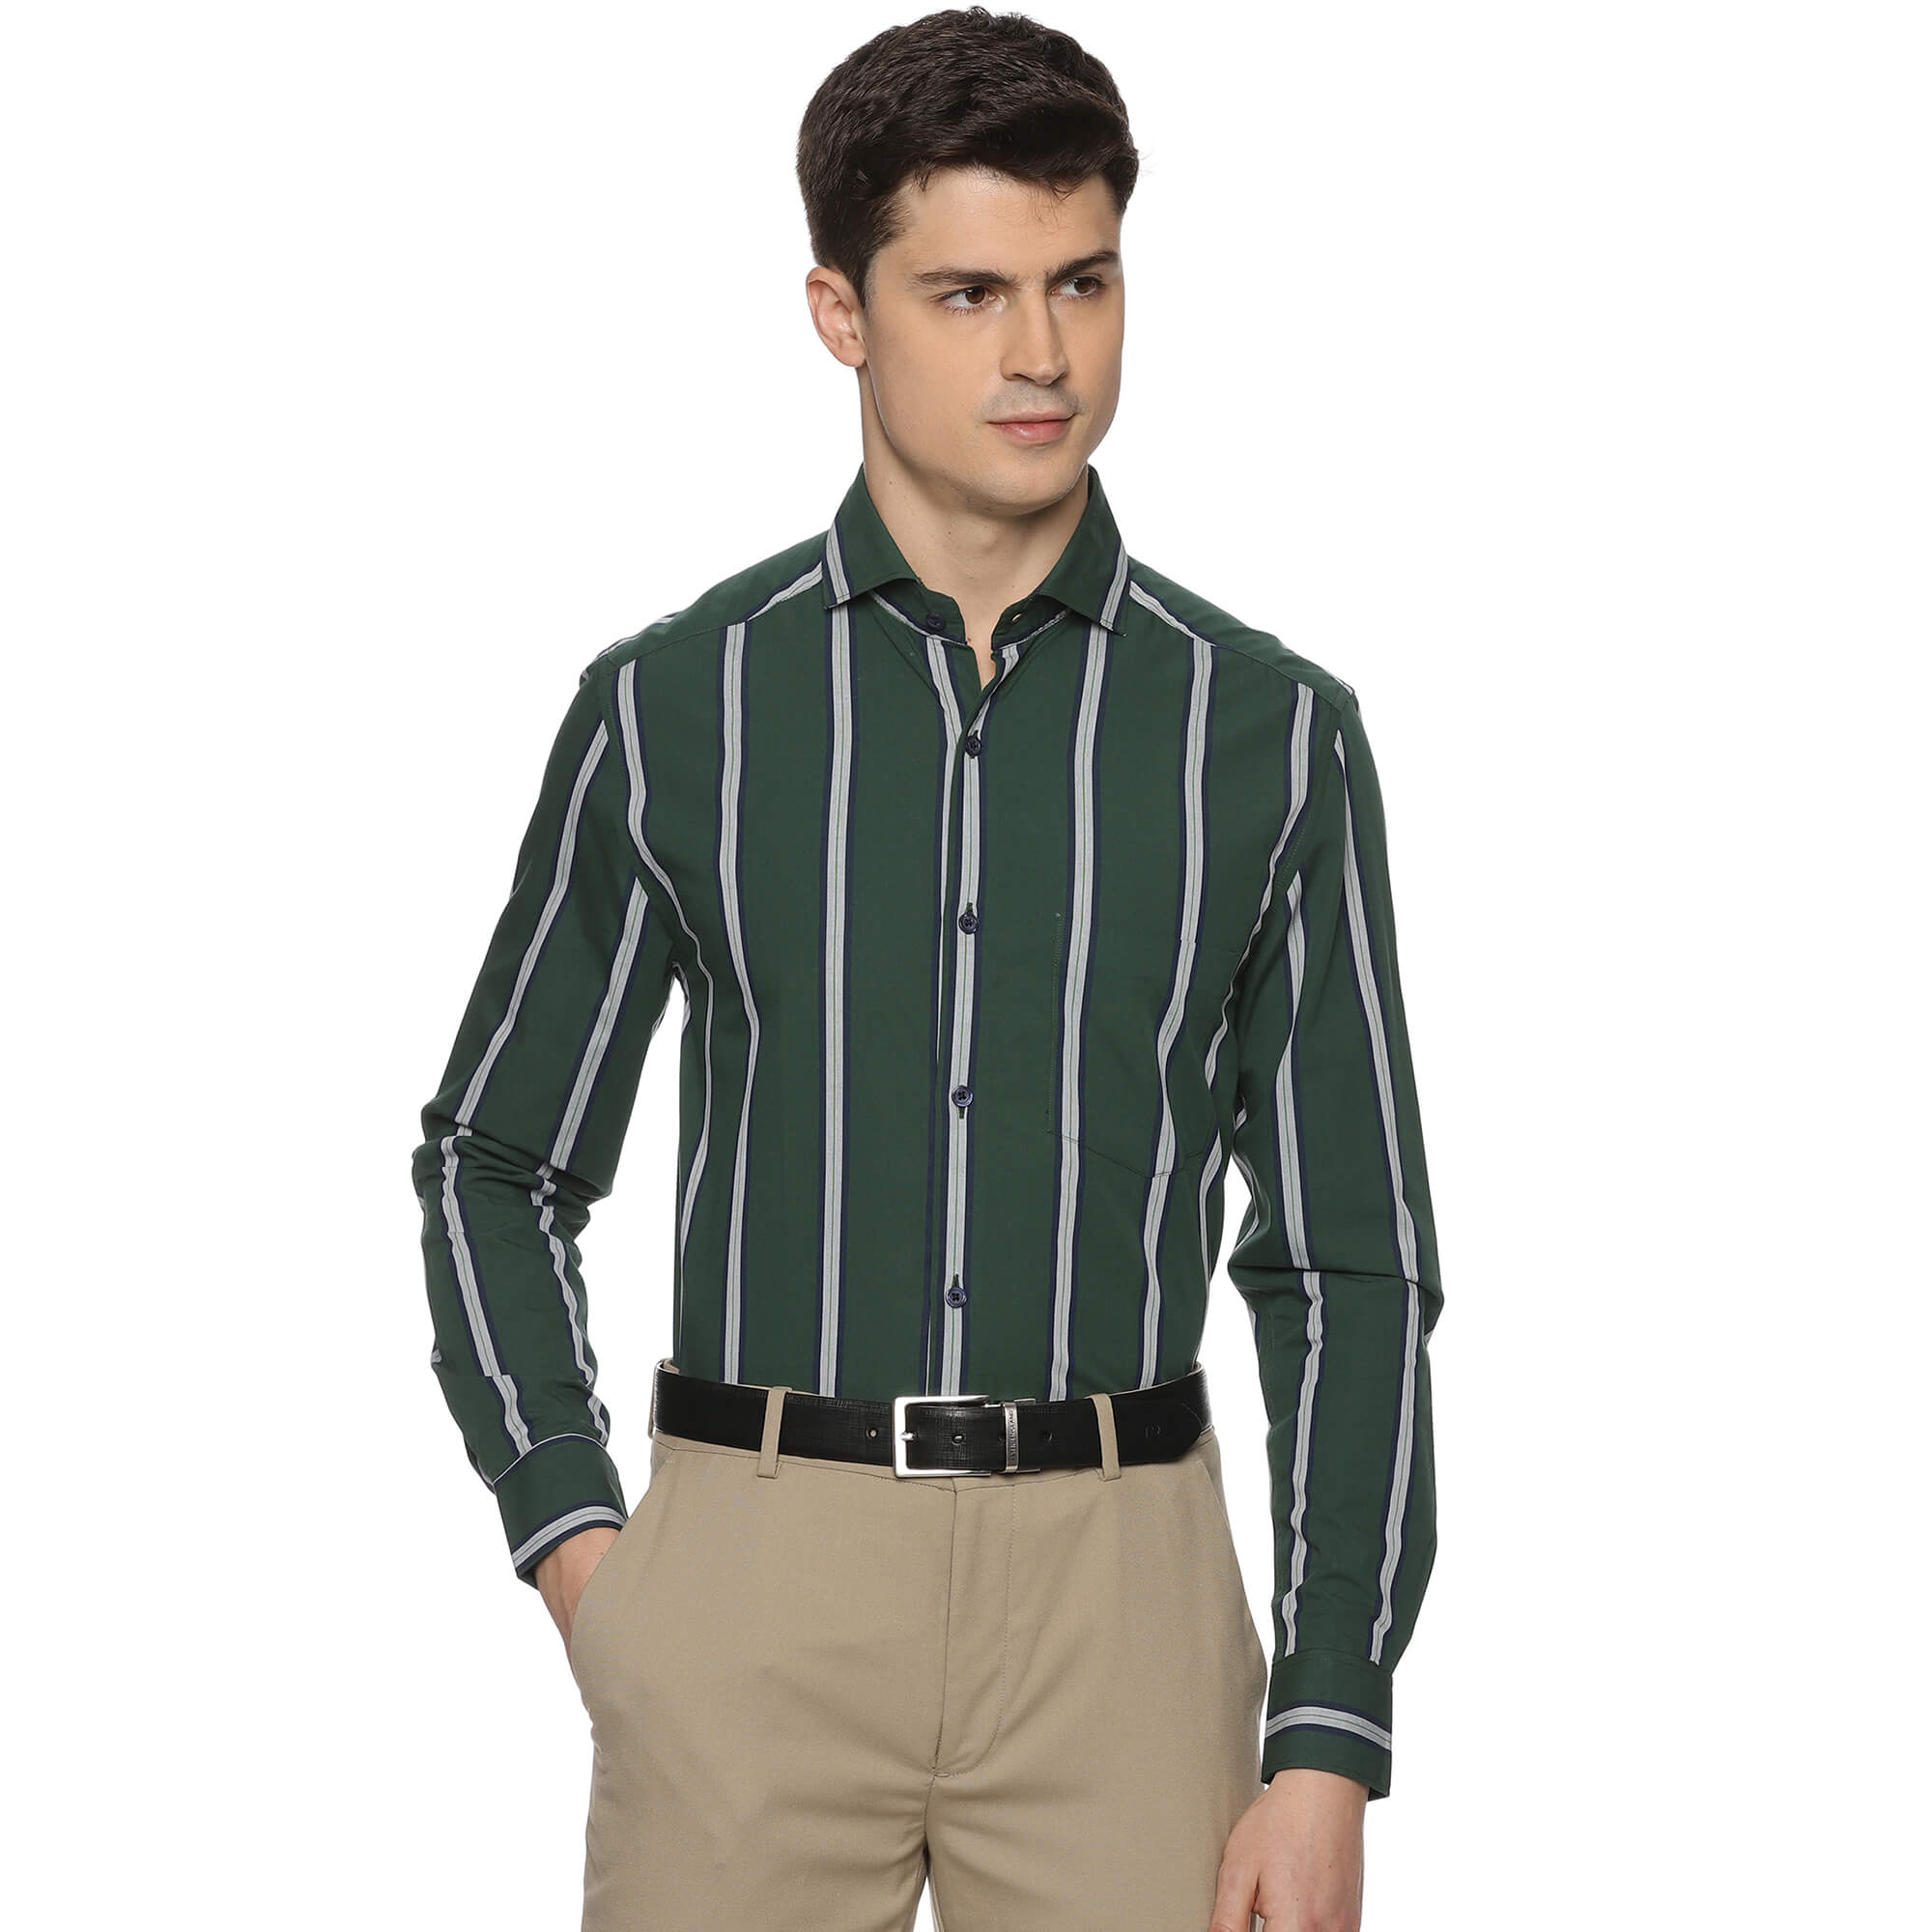 Skyline Cotton Stripes Shirt In Dark Green - The Formal Club